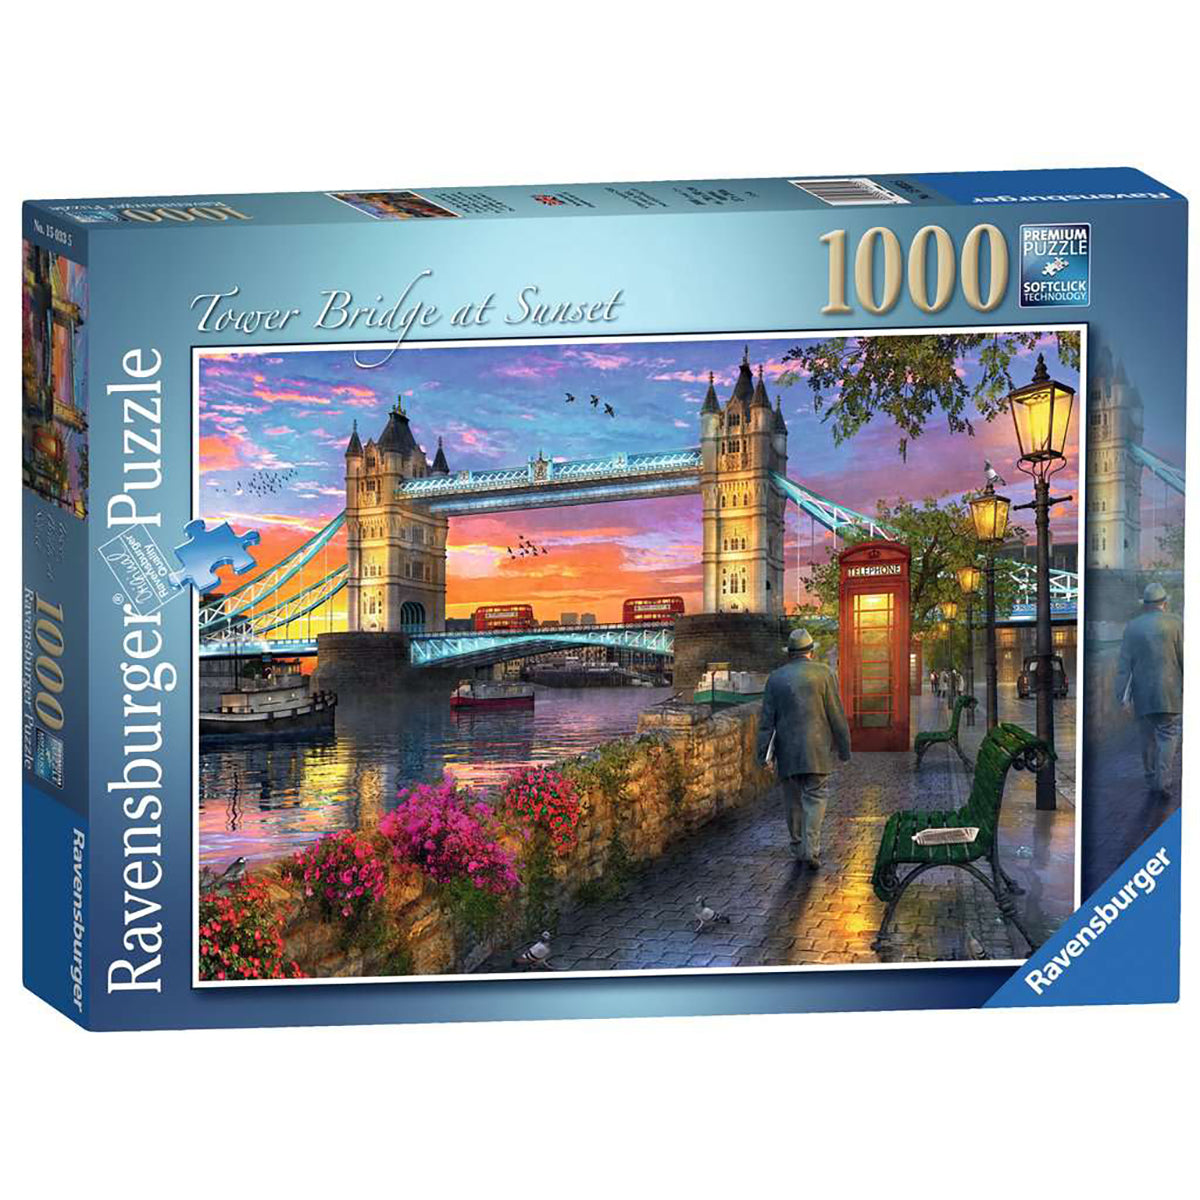 Tower Bridge at Sunset - 1000 Piece Puzzle box